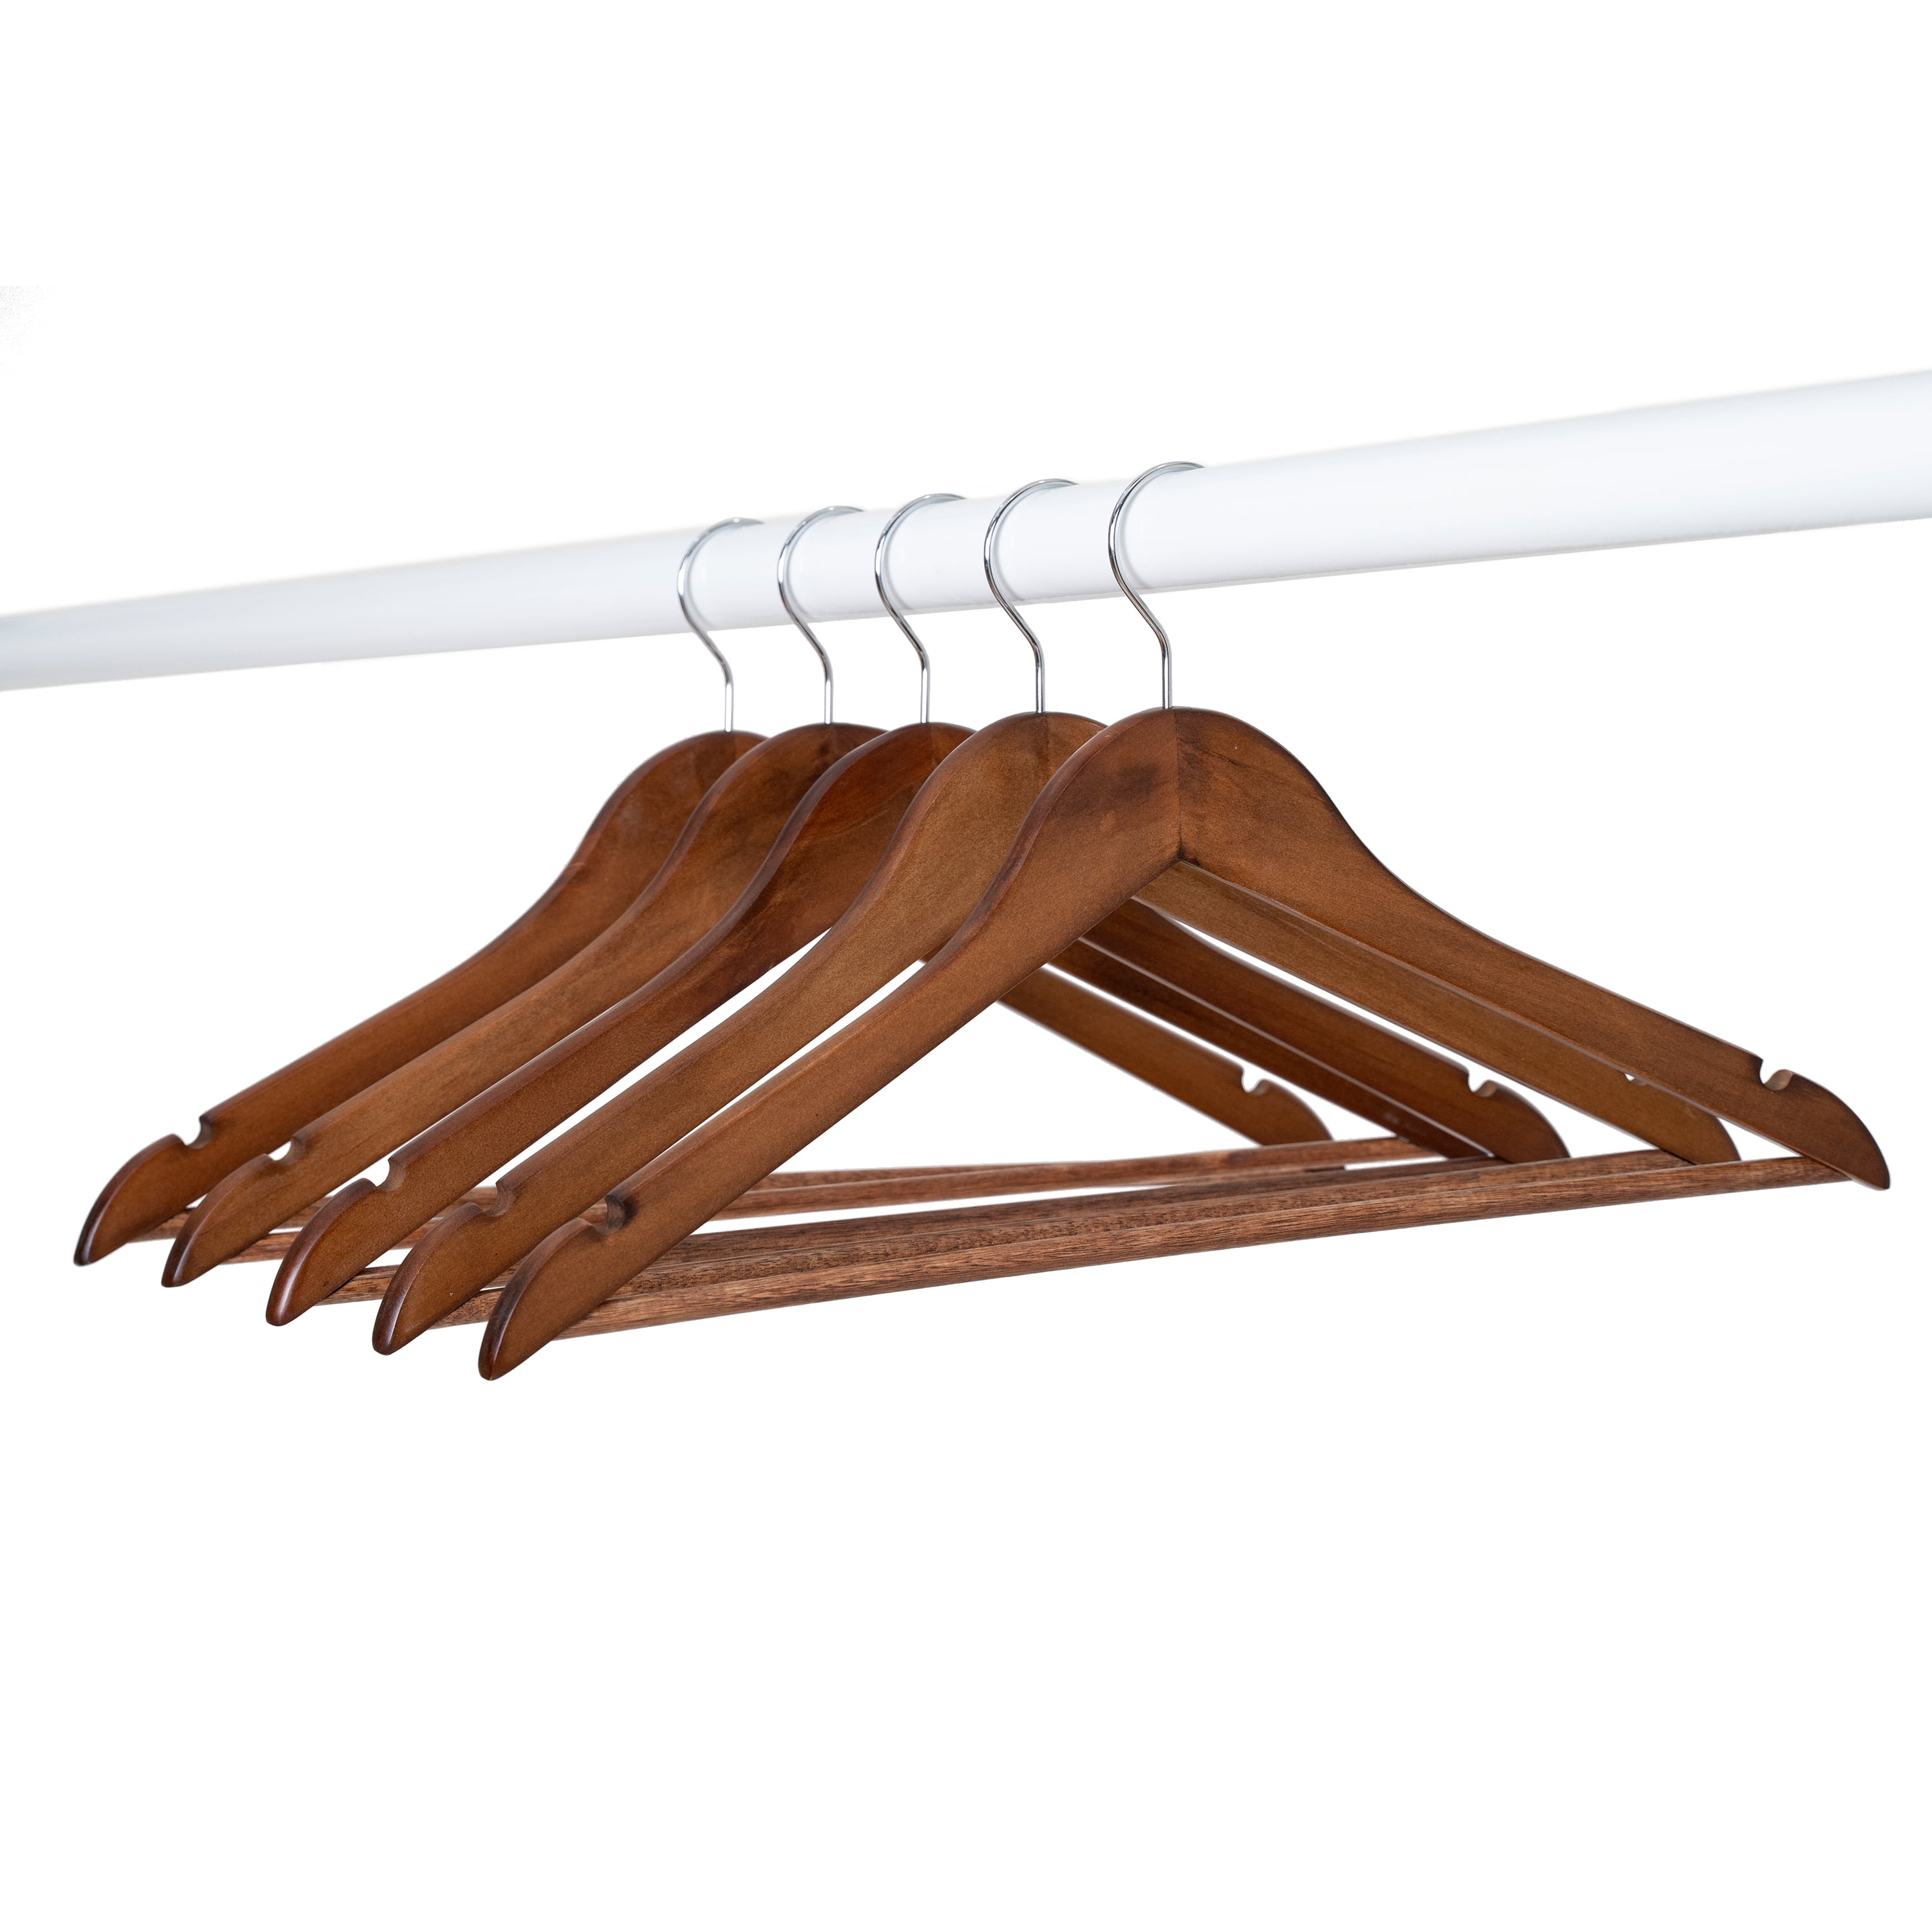 Kascade Wood Hangers (Pack of 50) - Bed Bath & Beyond - 10180355